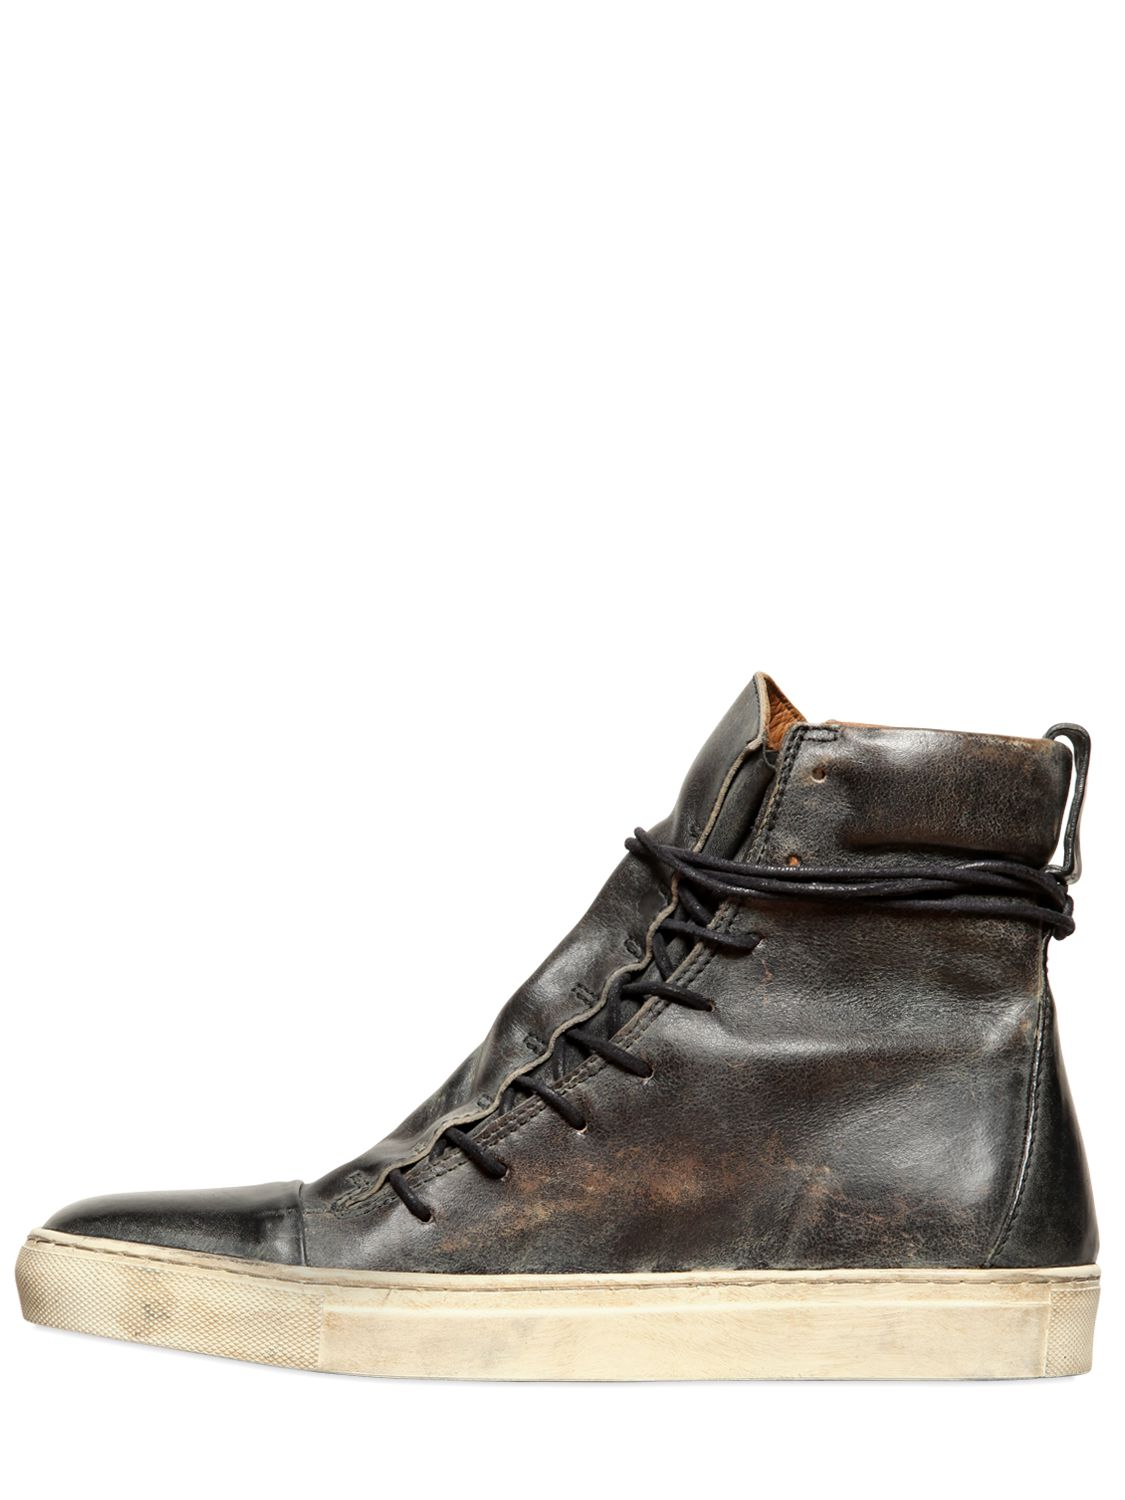 Lyst - John Varvatos Vintage Effect Leather High Top Sneakers in Gray ...